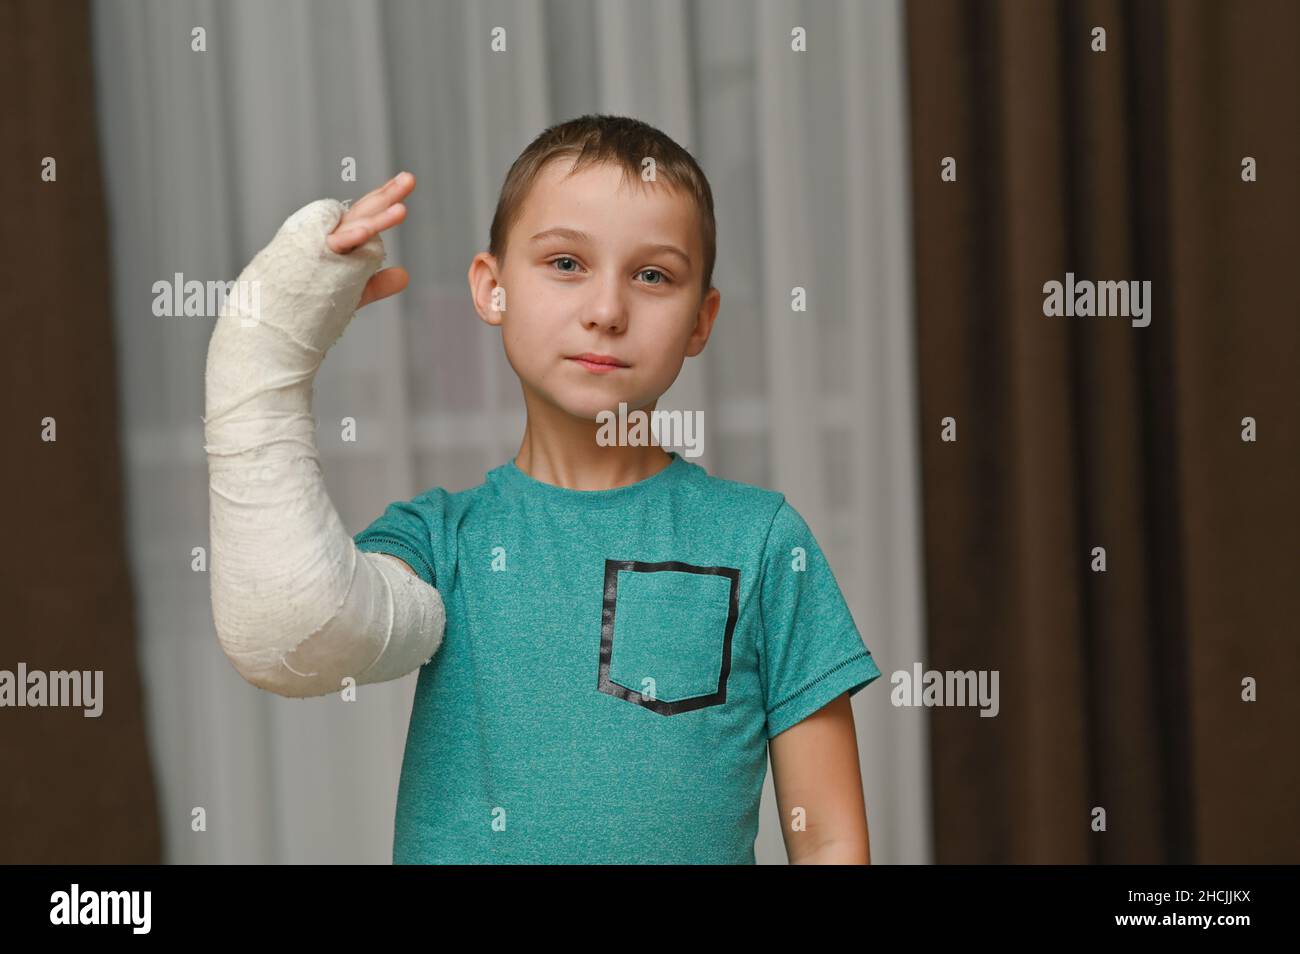 boy shows a broken arm in a cast. Stock Photo